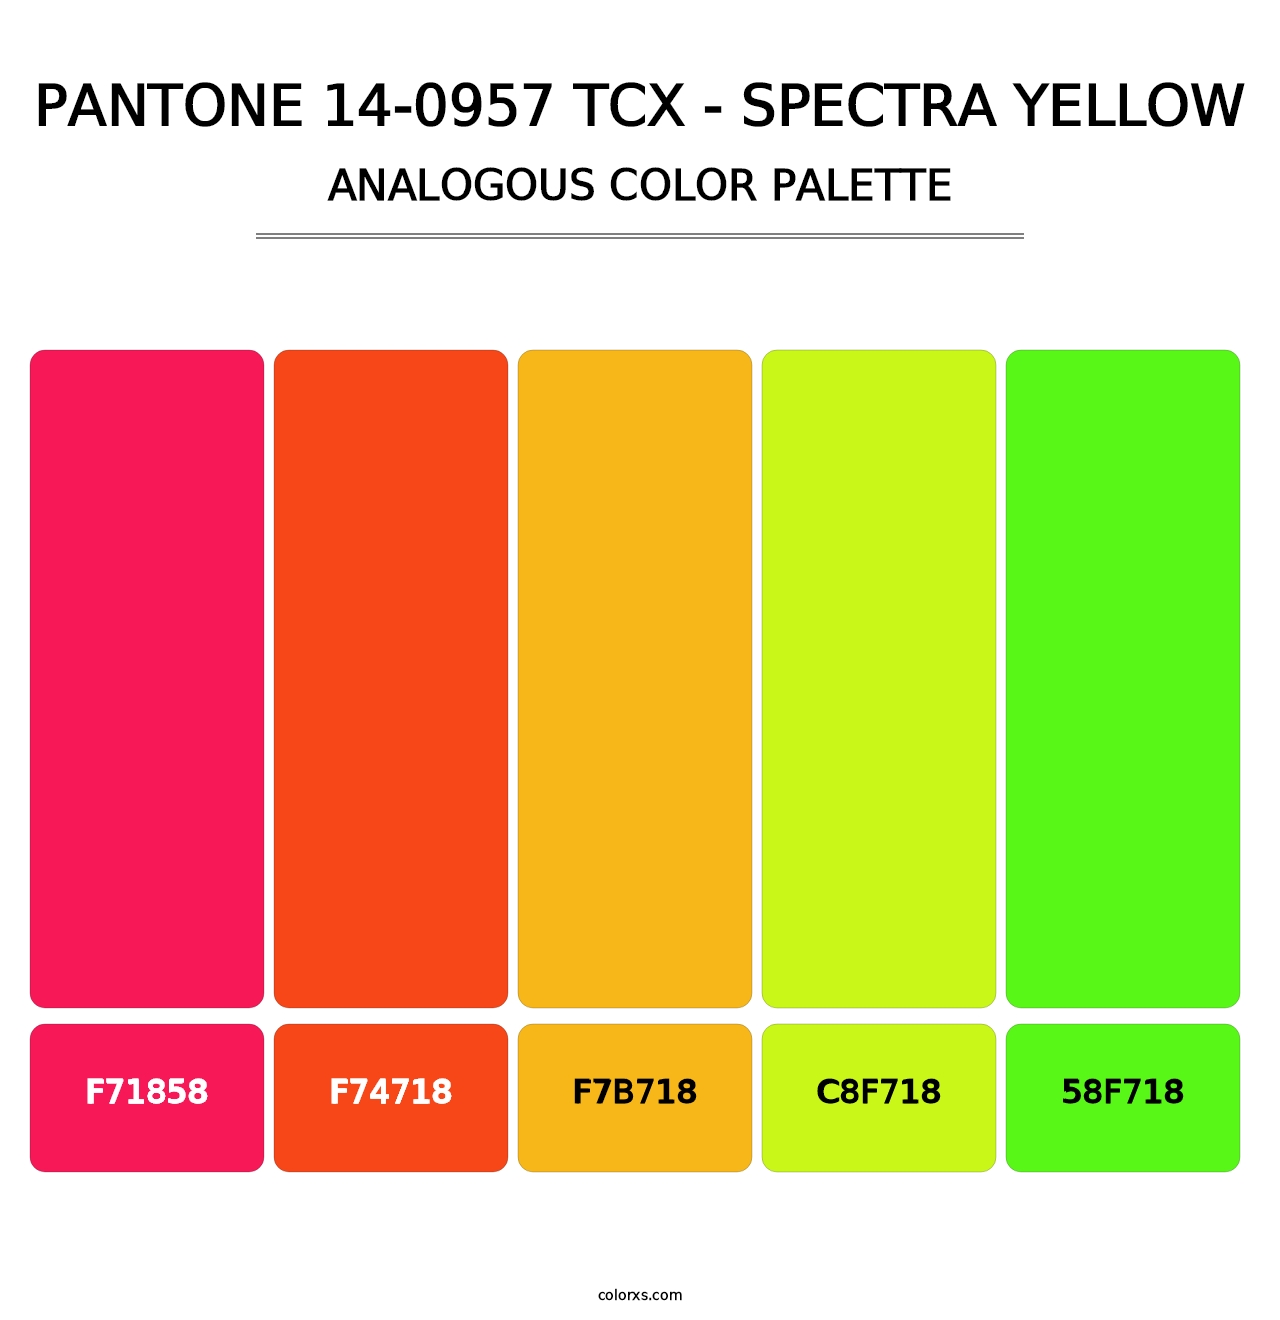 PANTONE 14-0957 TCX - Spectra Yellow - Analogous Color Palette